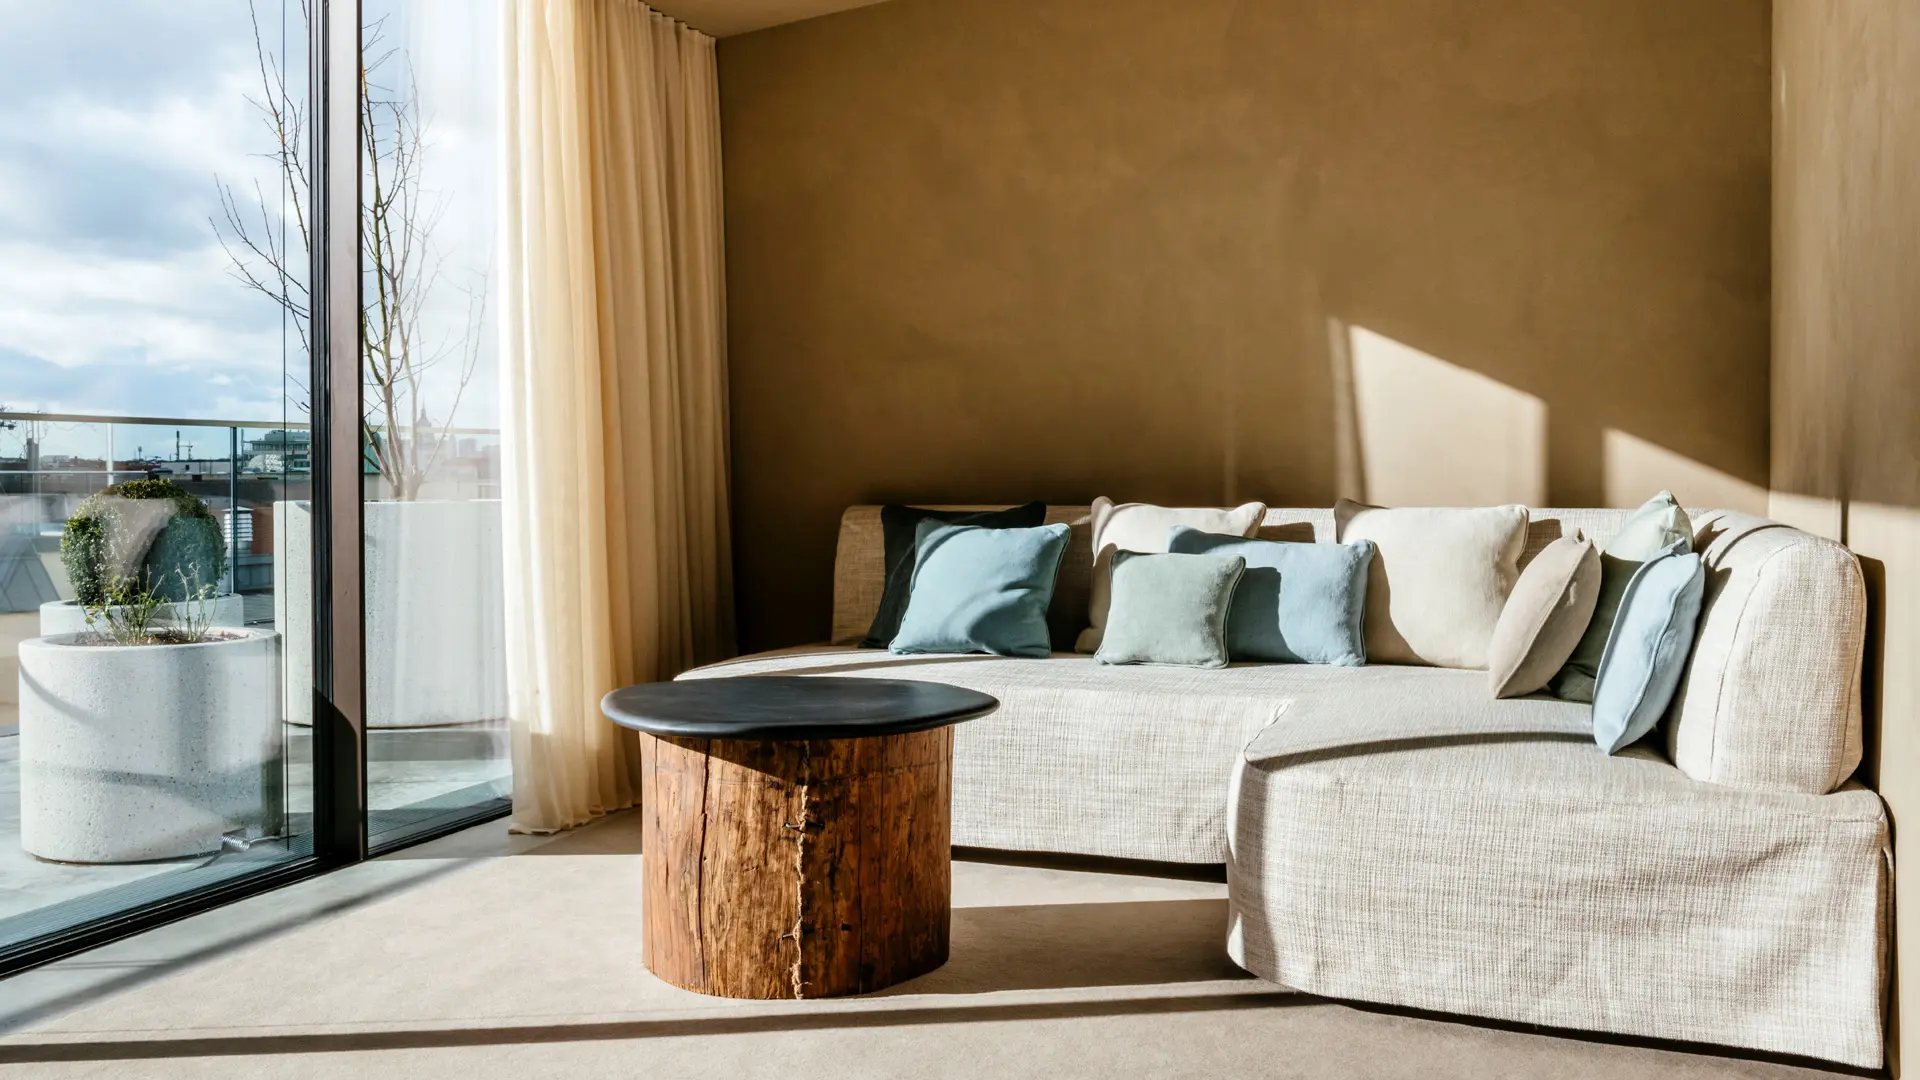 Hotel review Accommodation' - Bayerischer Hof - 5